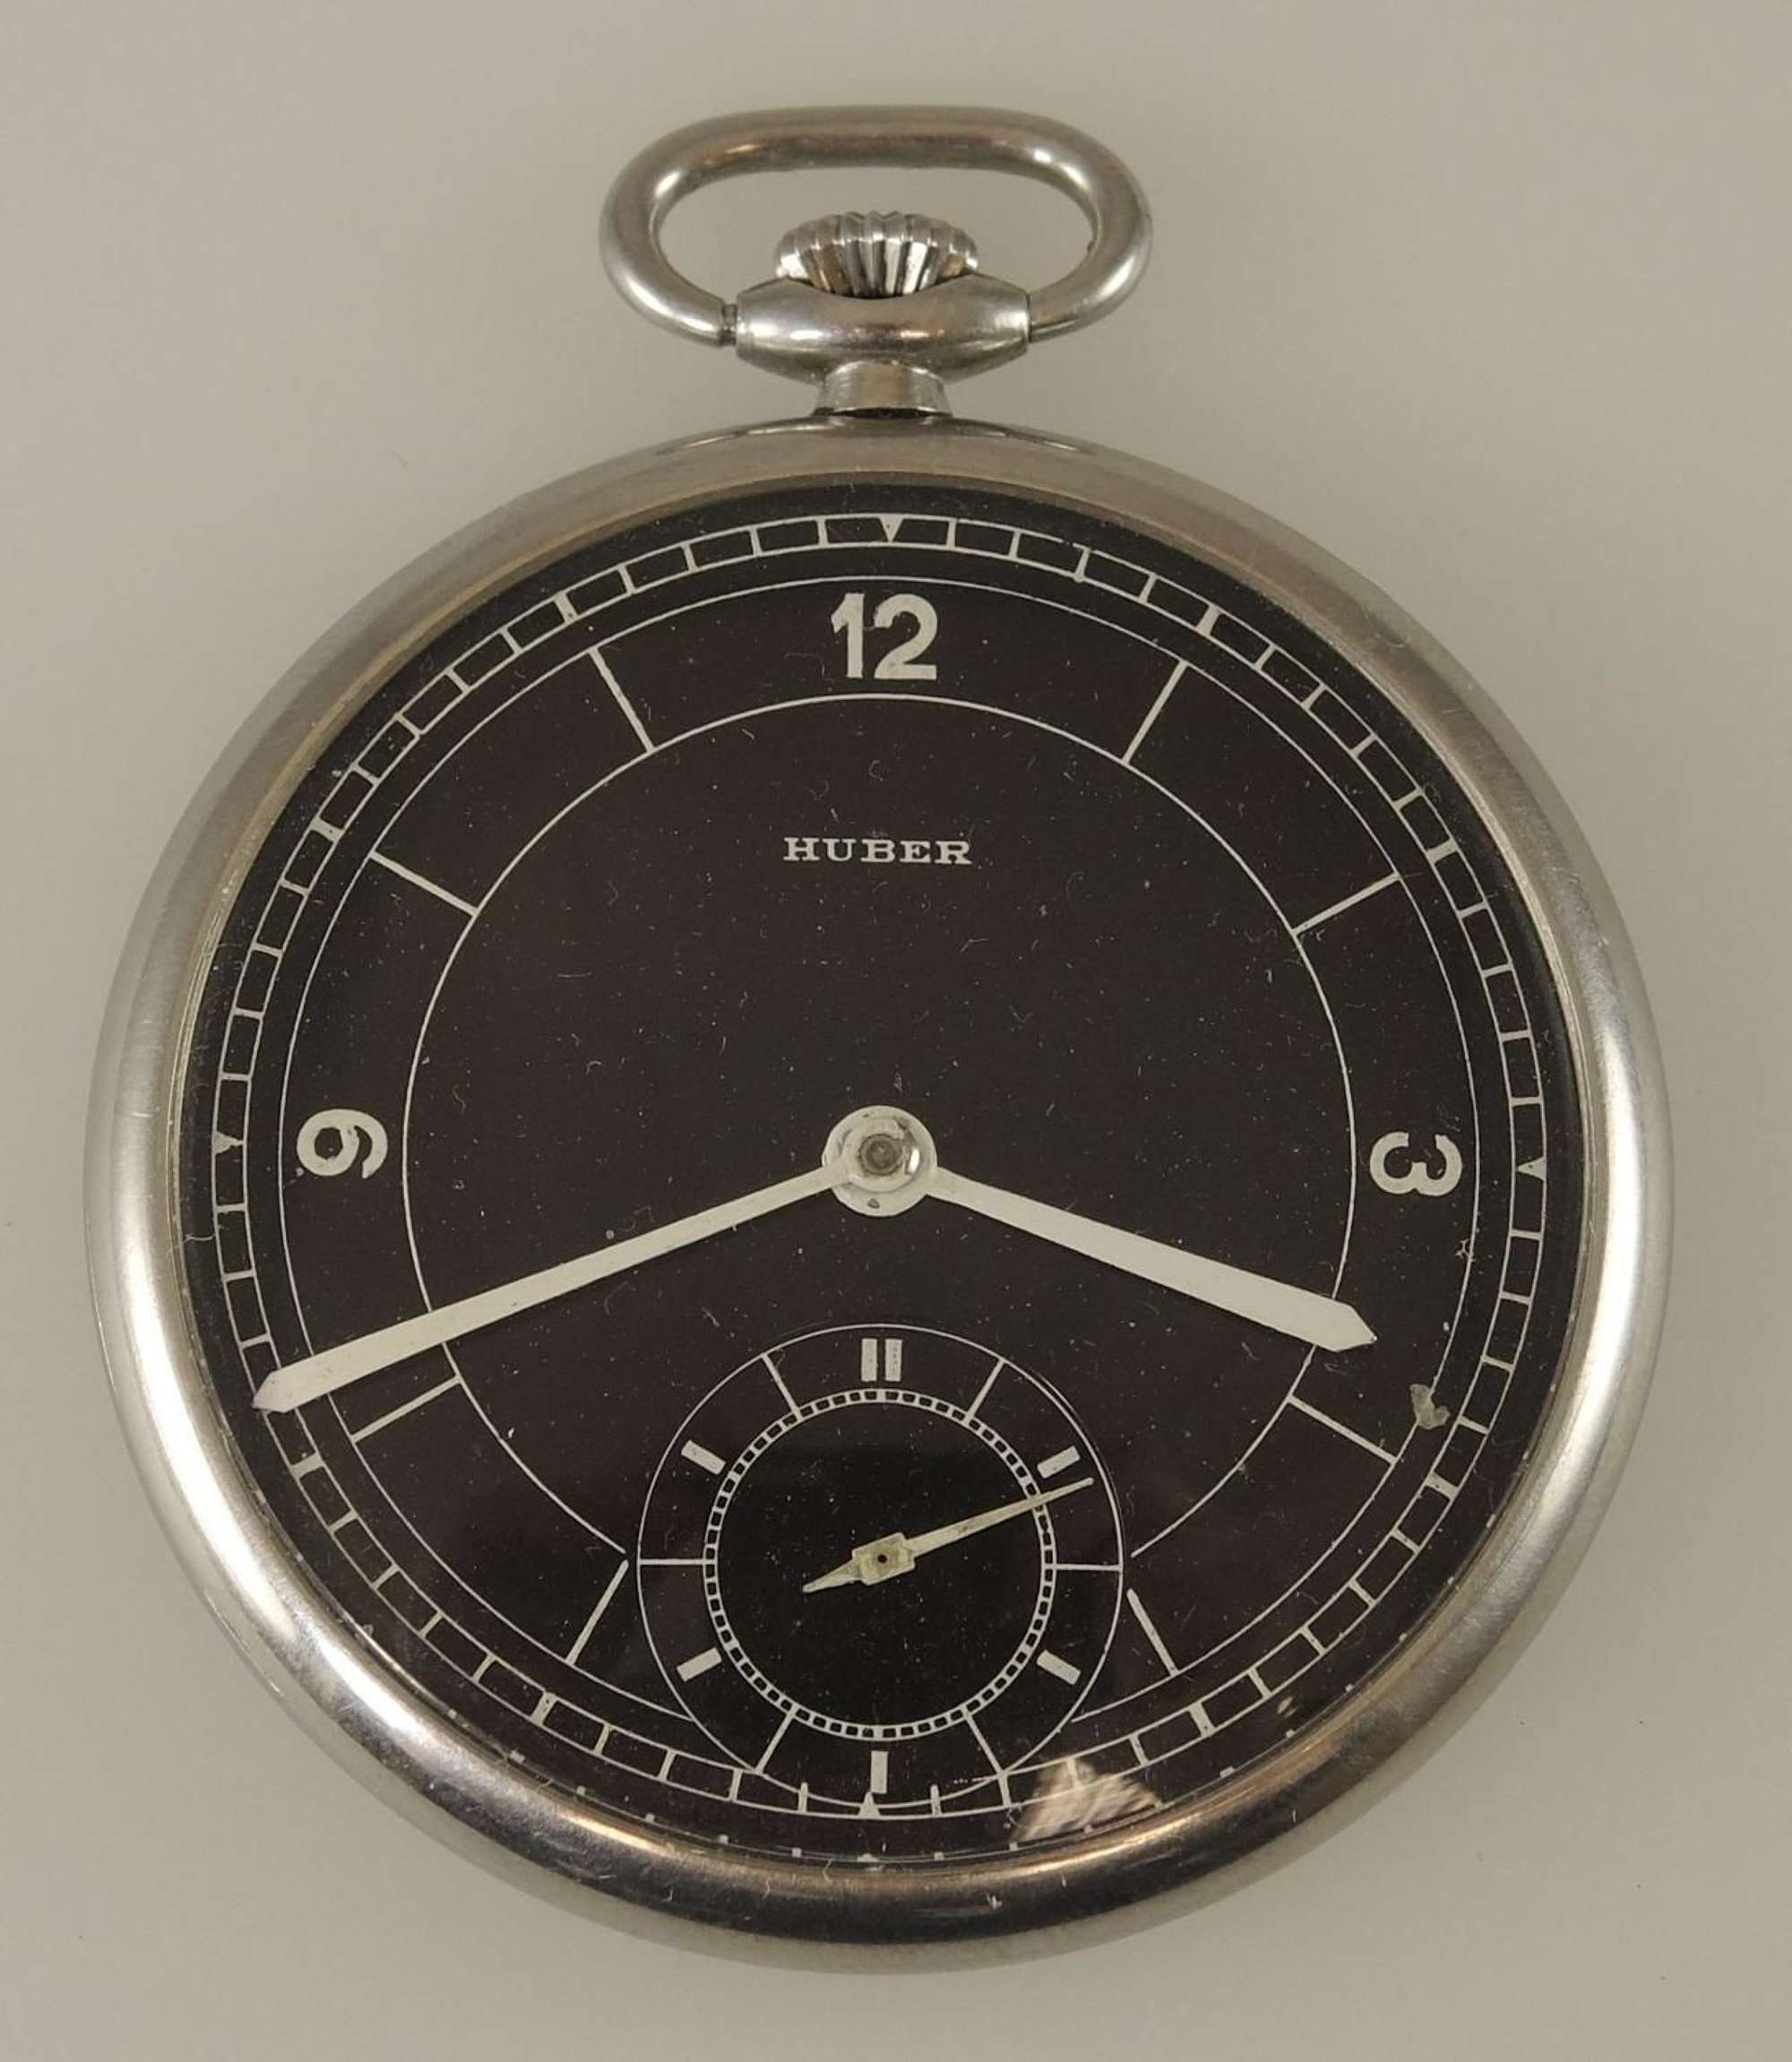 Stylish Vintage pocket watch by Huber c1930